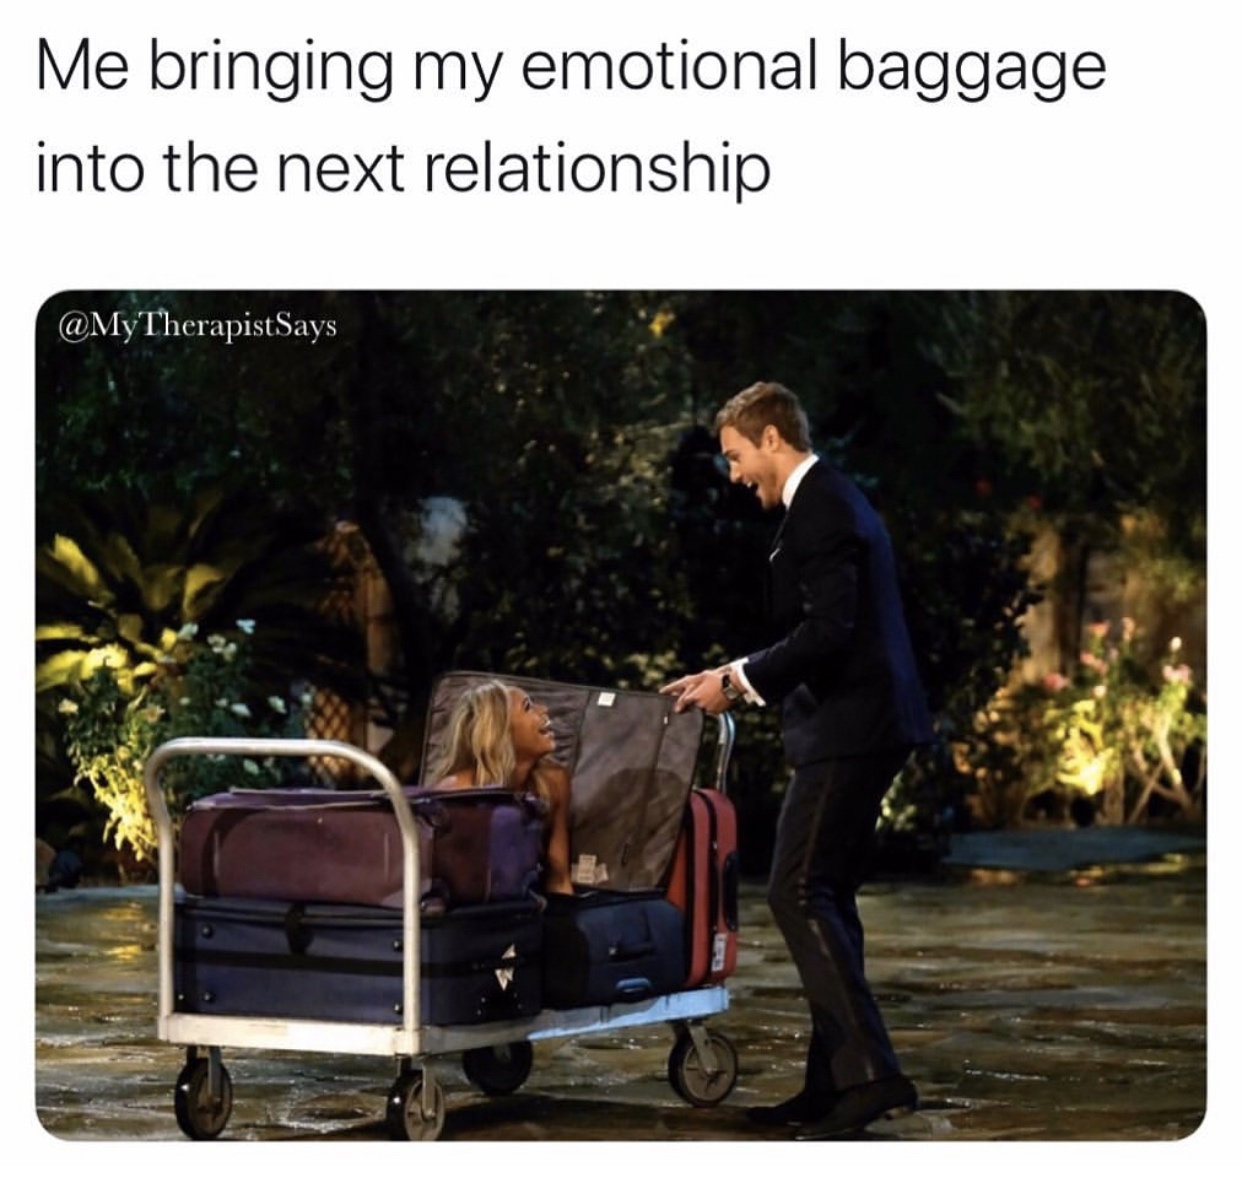 human behavior - Me bringing my emotional baggage into the next relationship